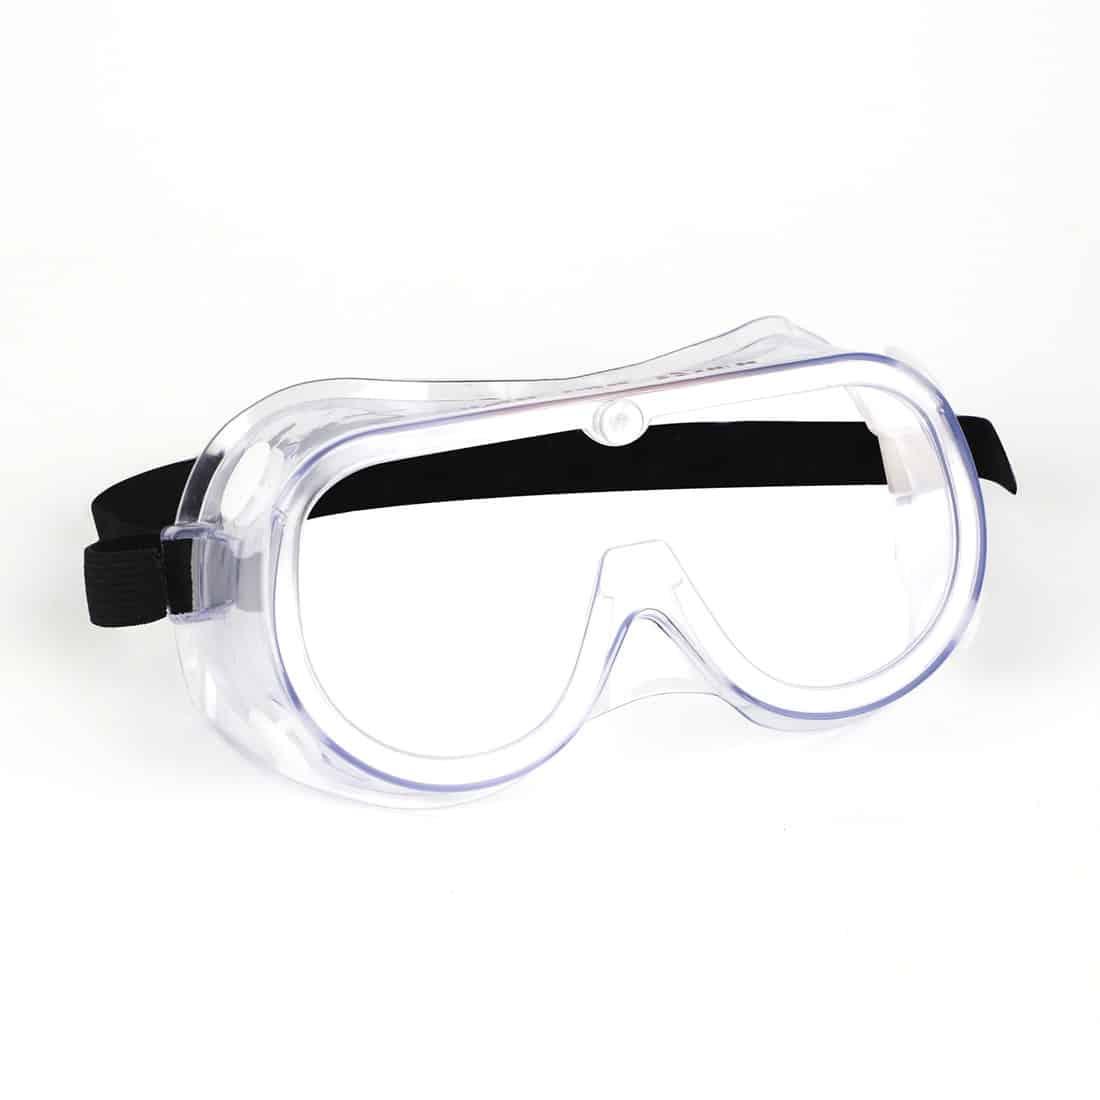 Litheli Safety Anti-Fog Goggles